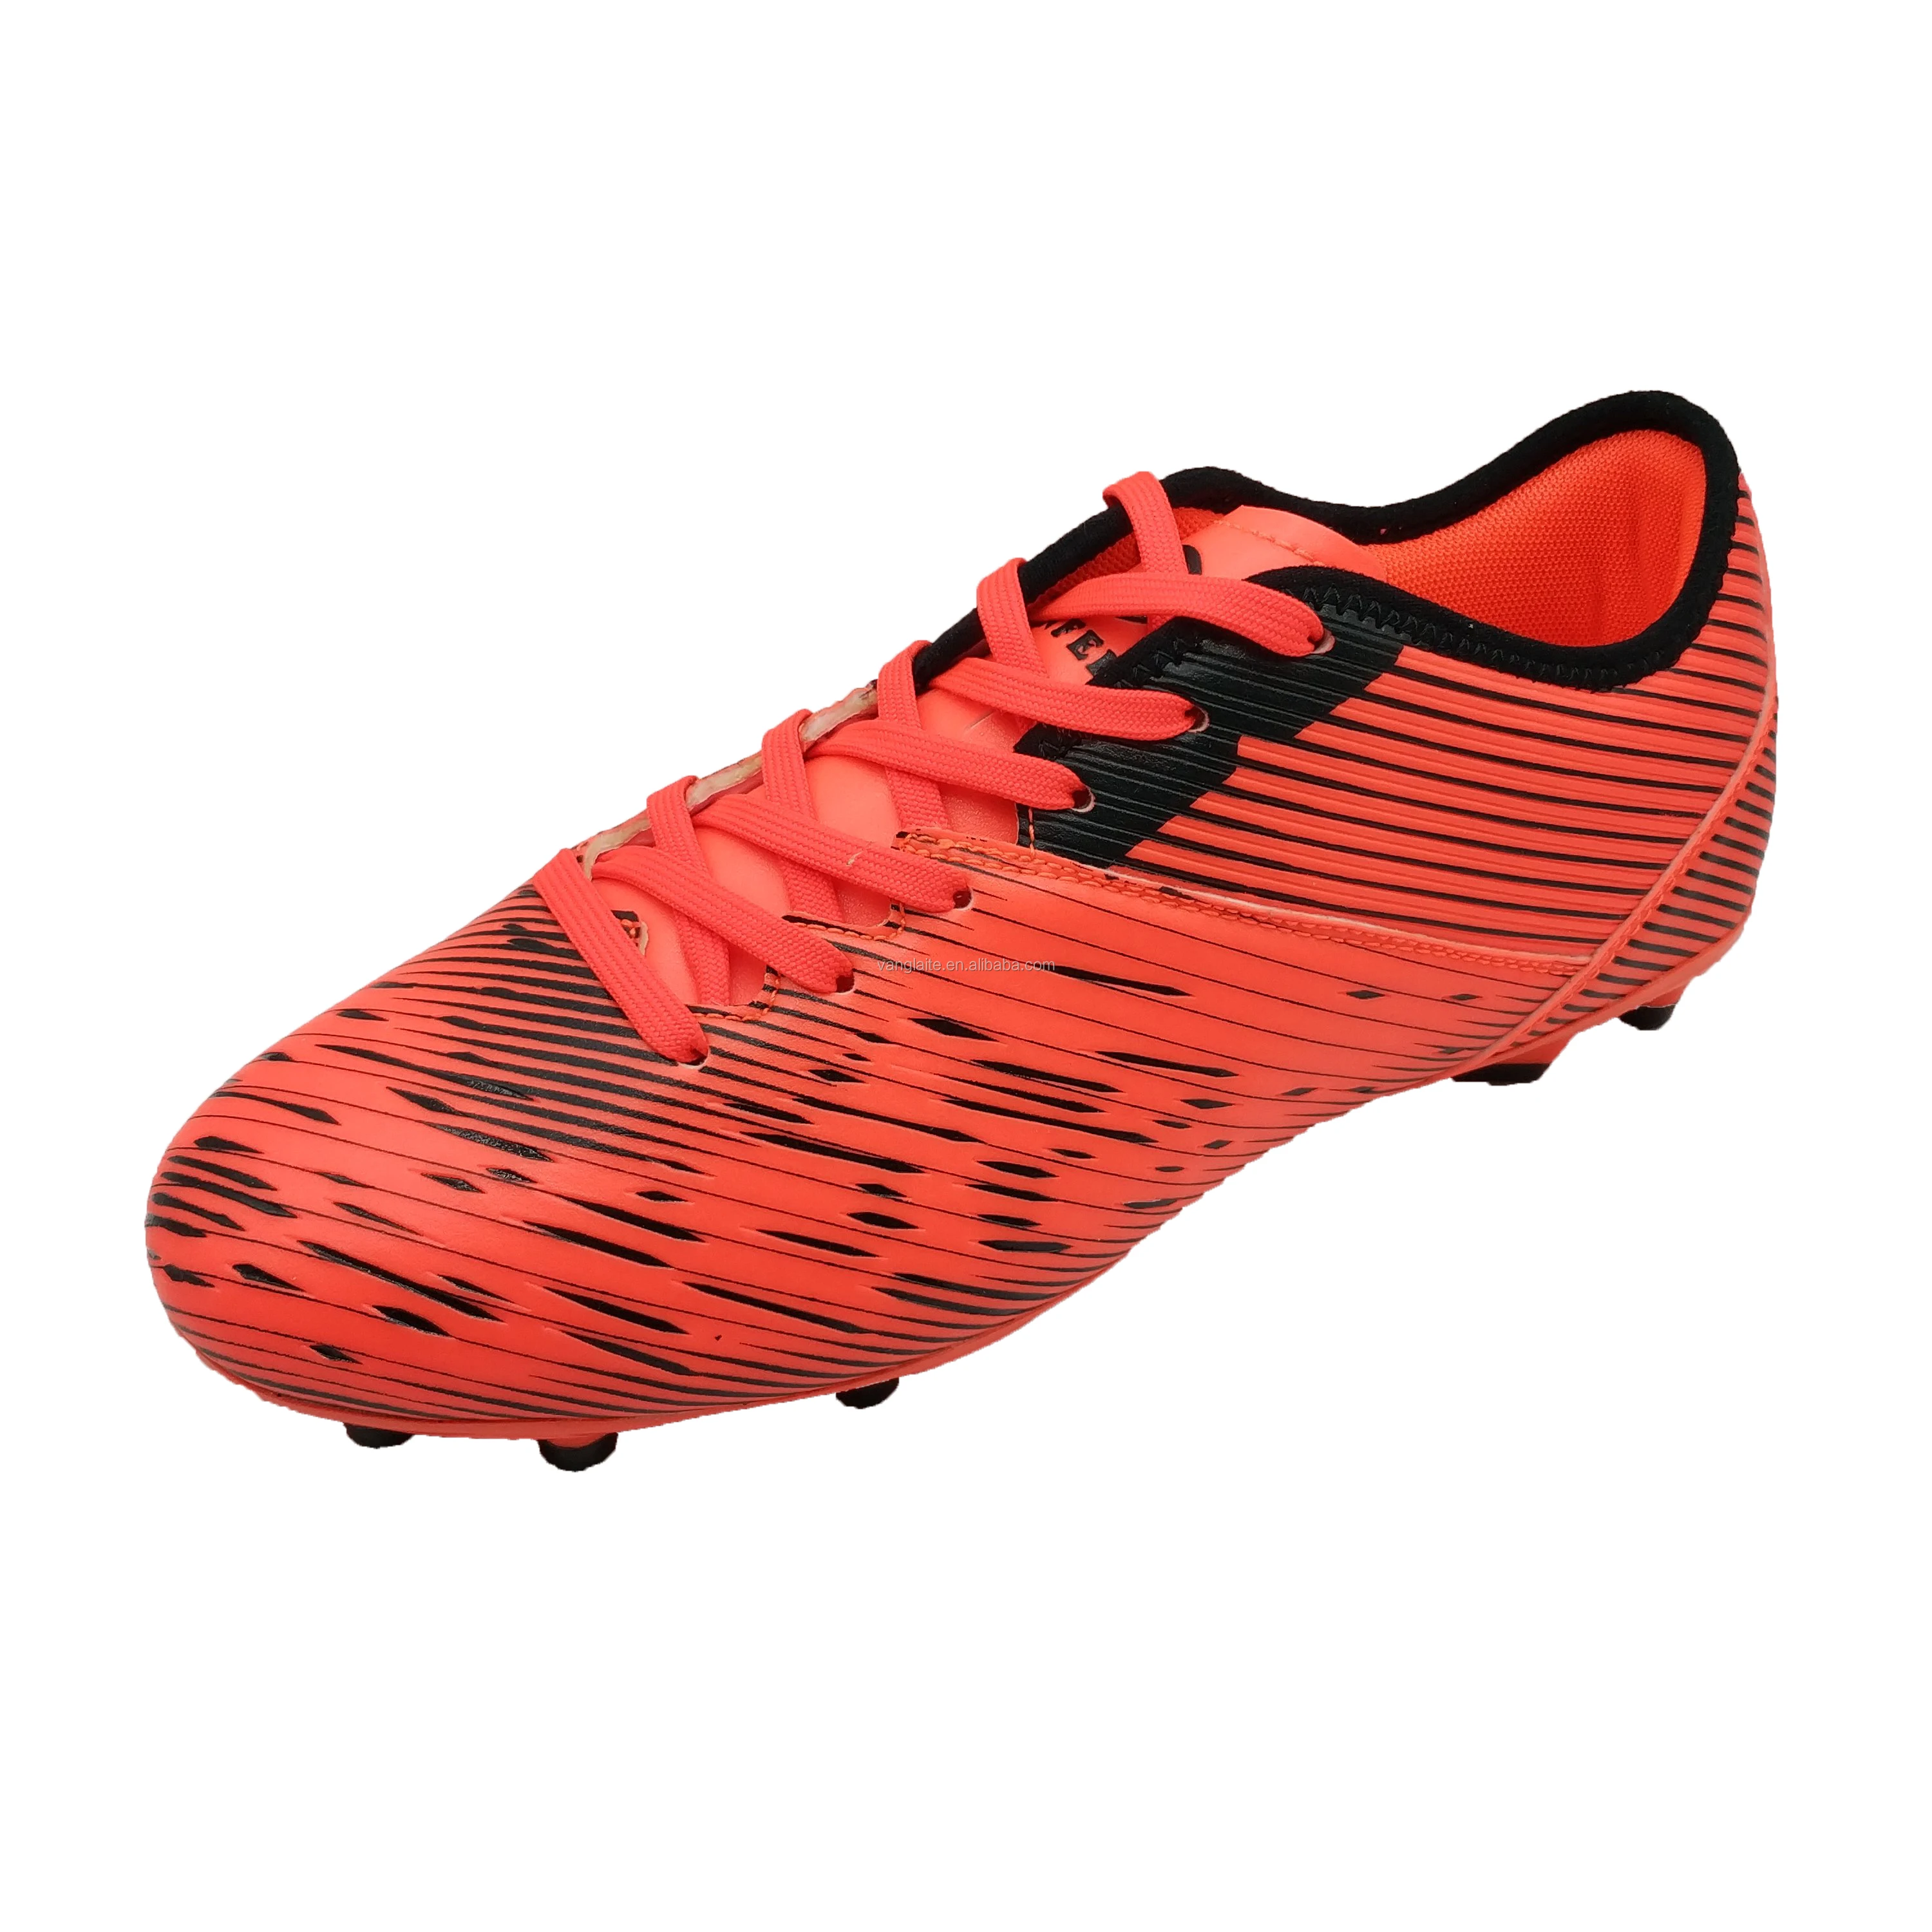 Factory Modern Design Soccer Boots Indoor Football Shoes For Men